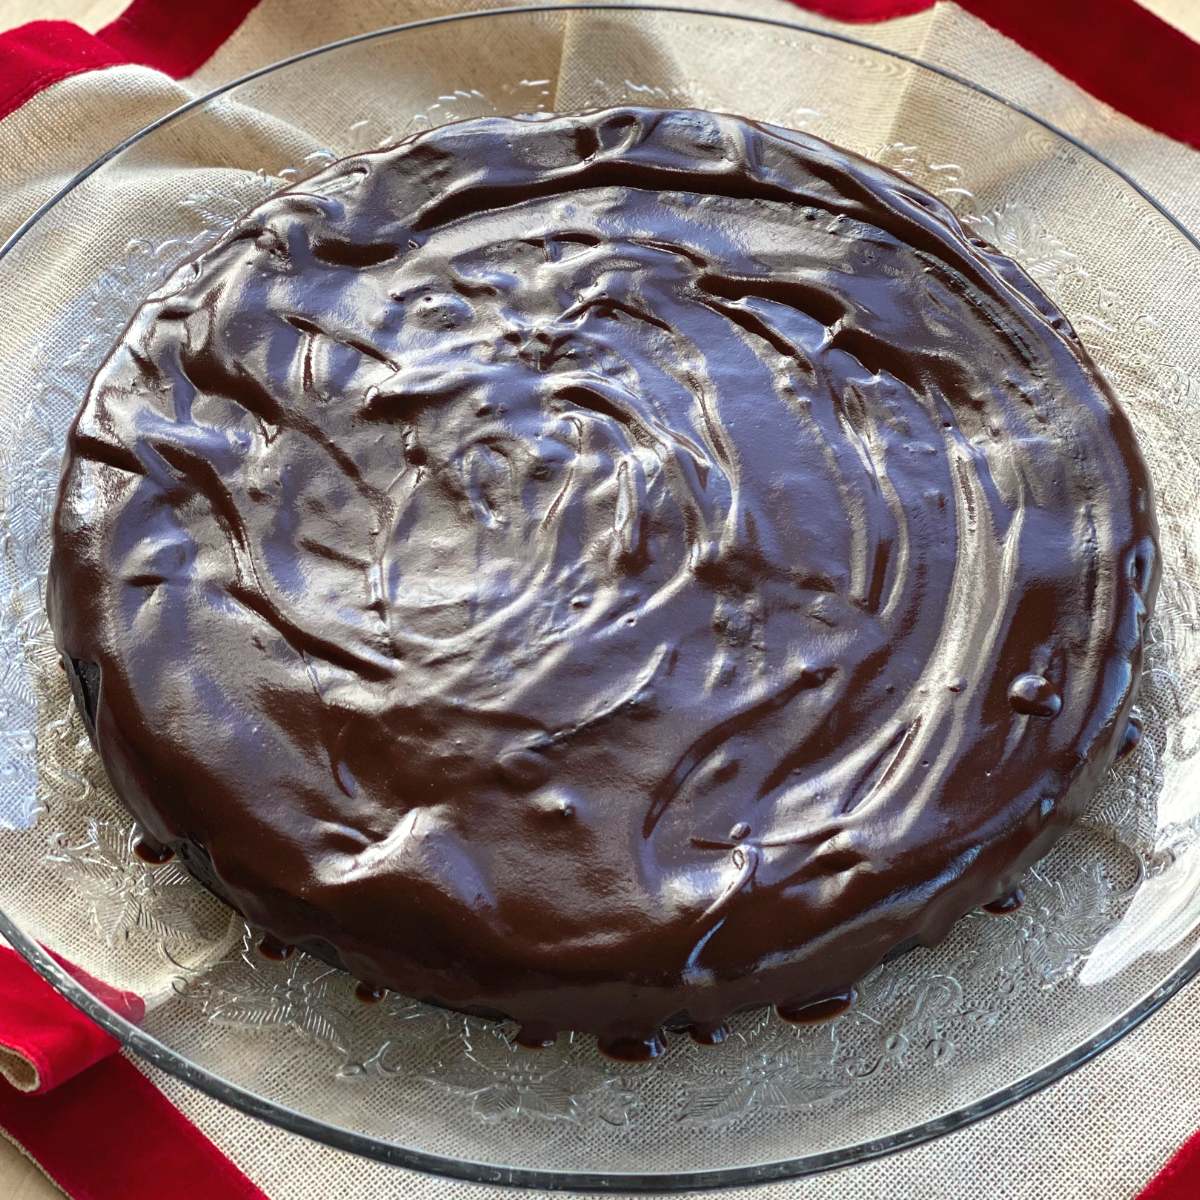 Flourless chocolate cake with ganache on a glass cake plate.